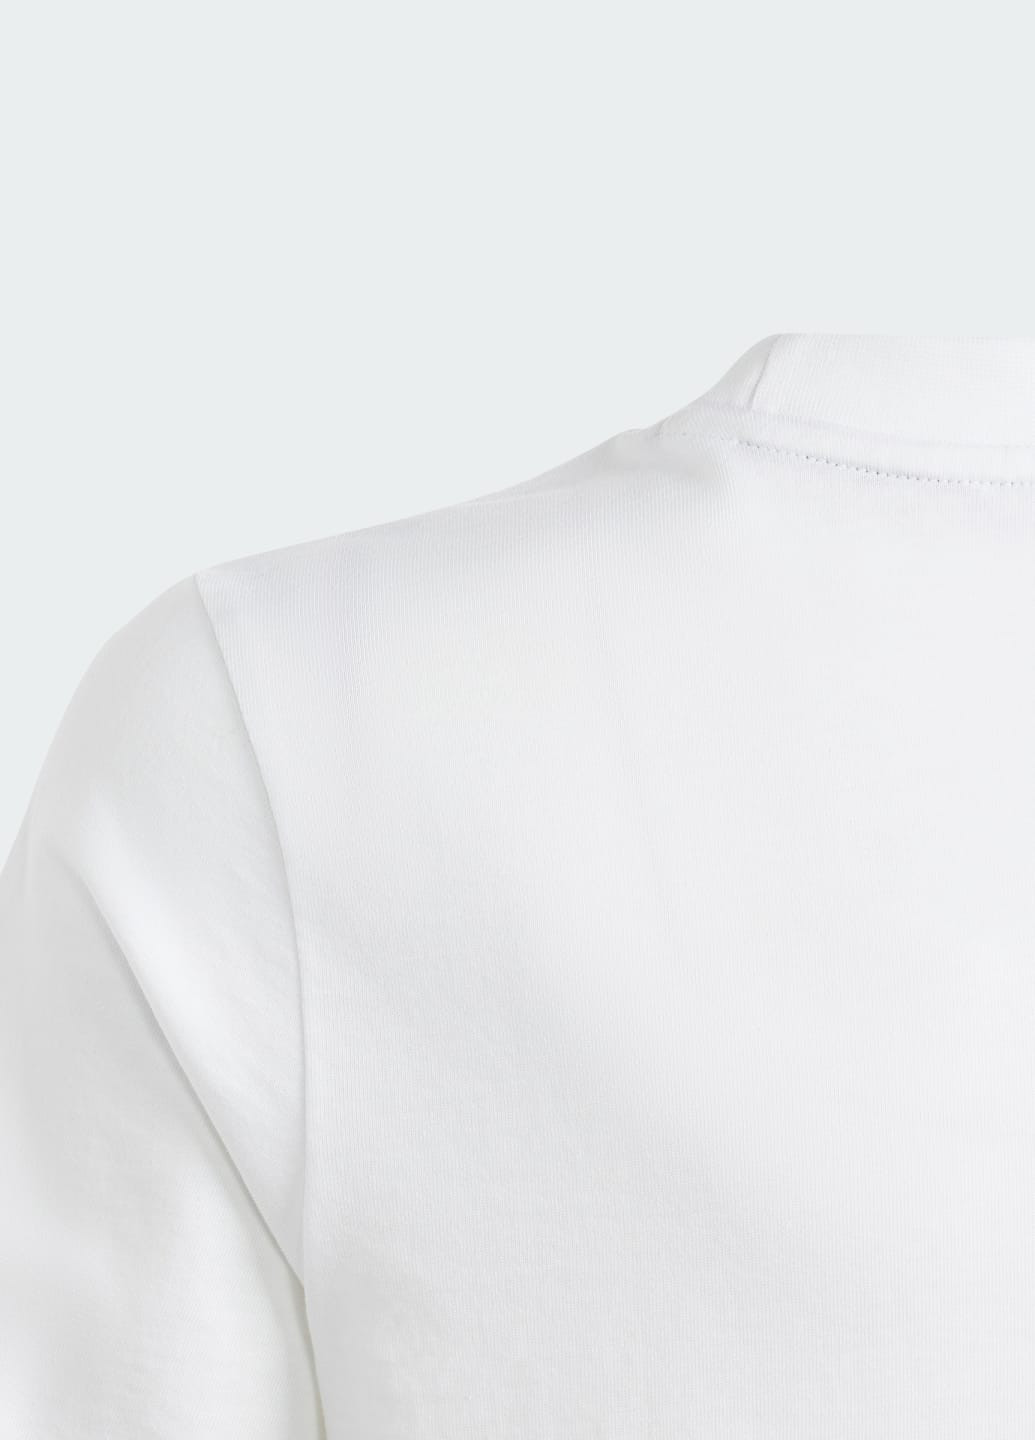 Белая демисезонная футболка essentials small logo cotton adidas